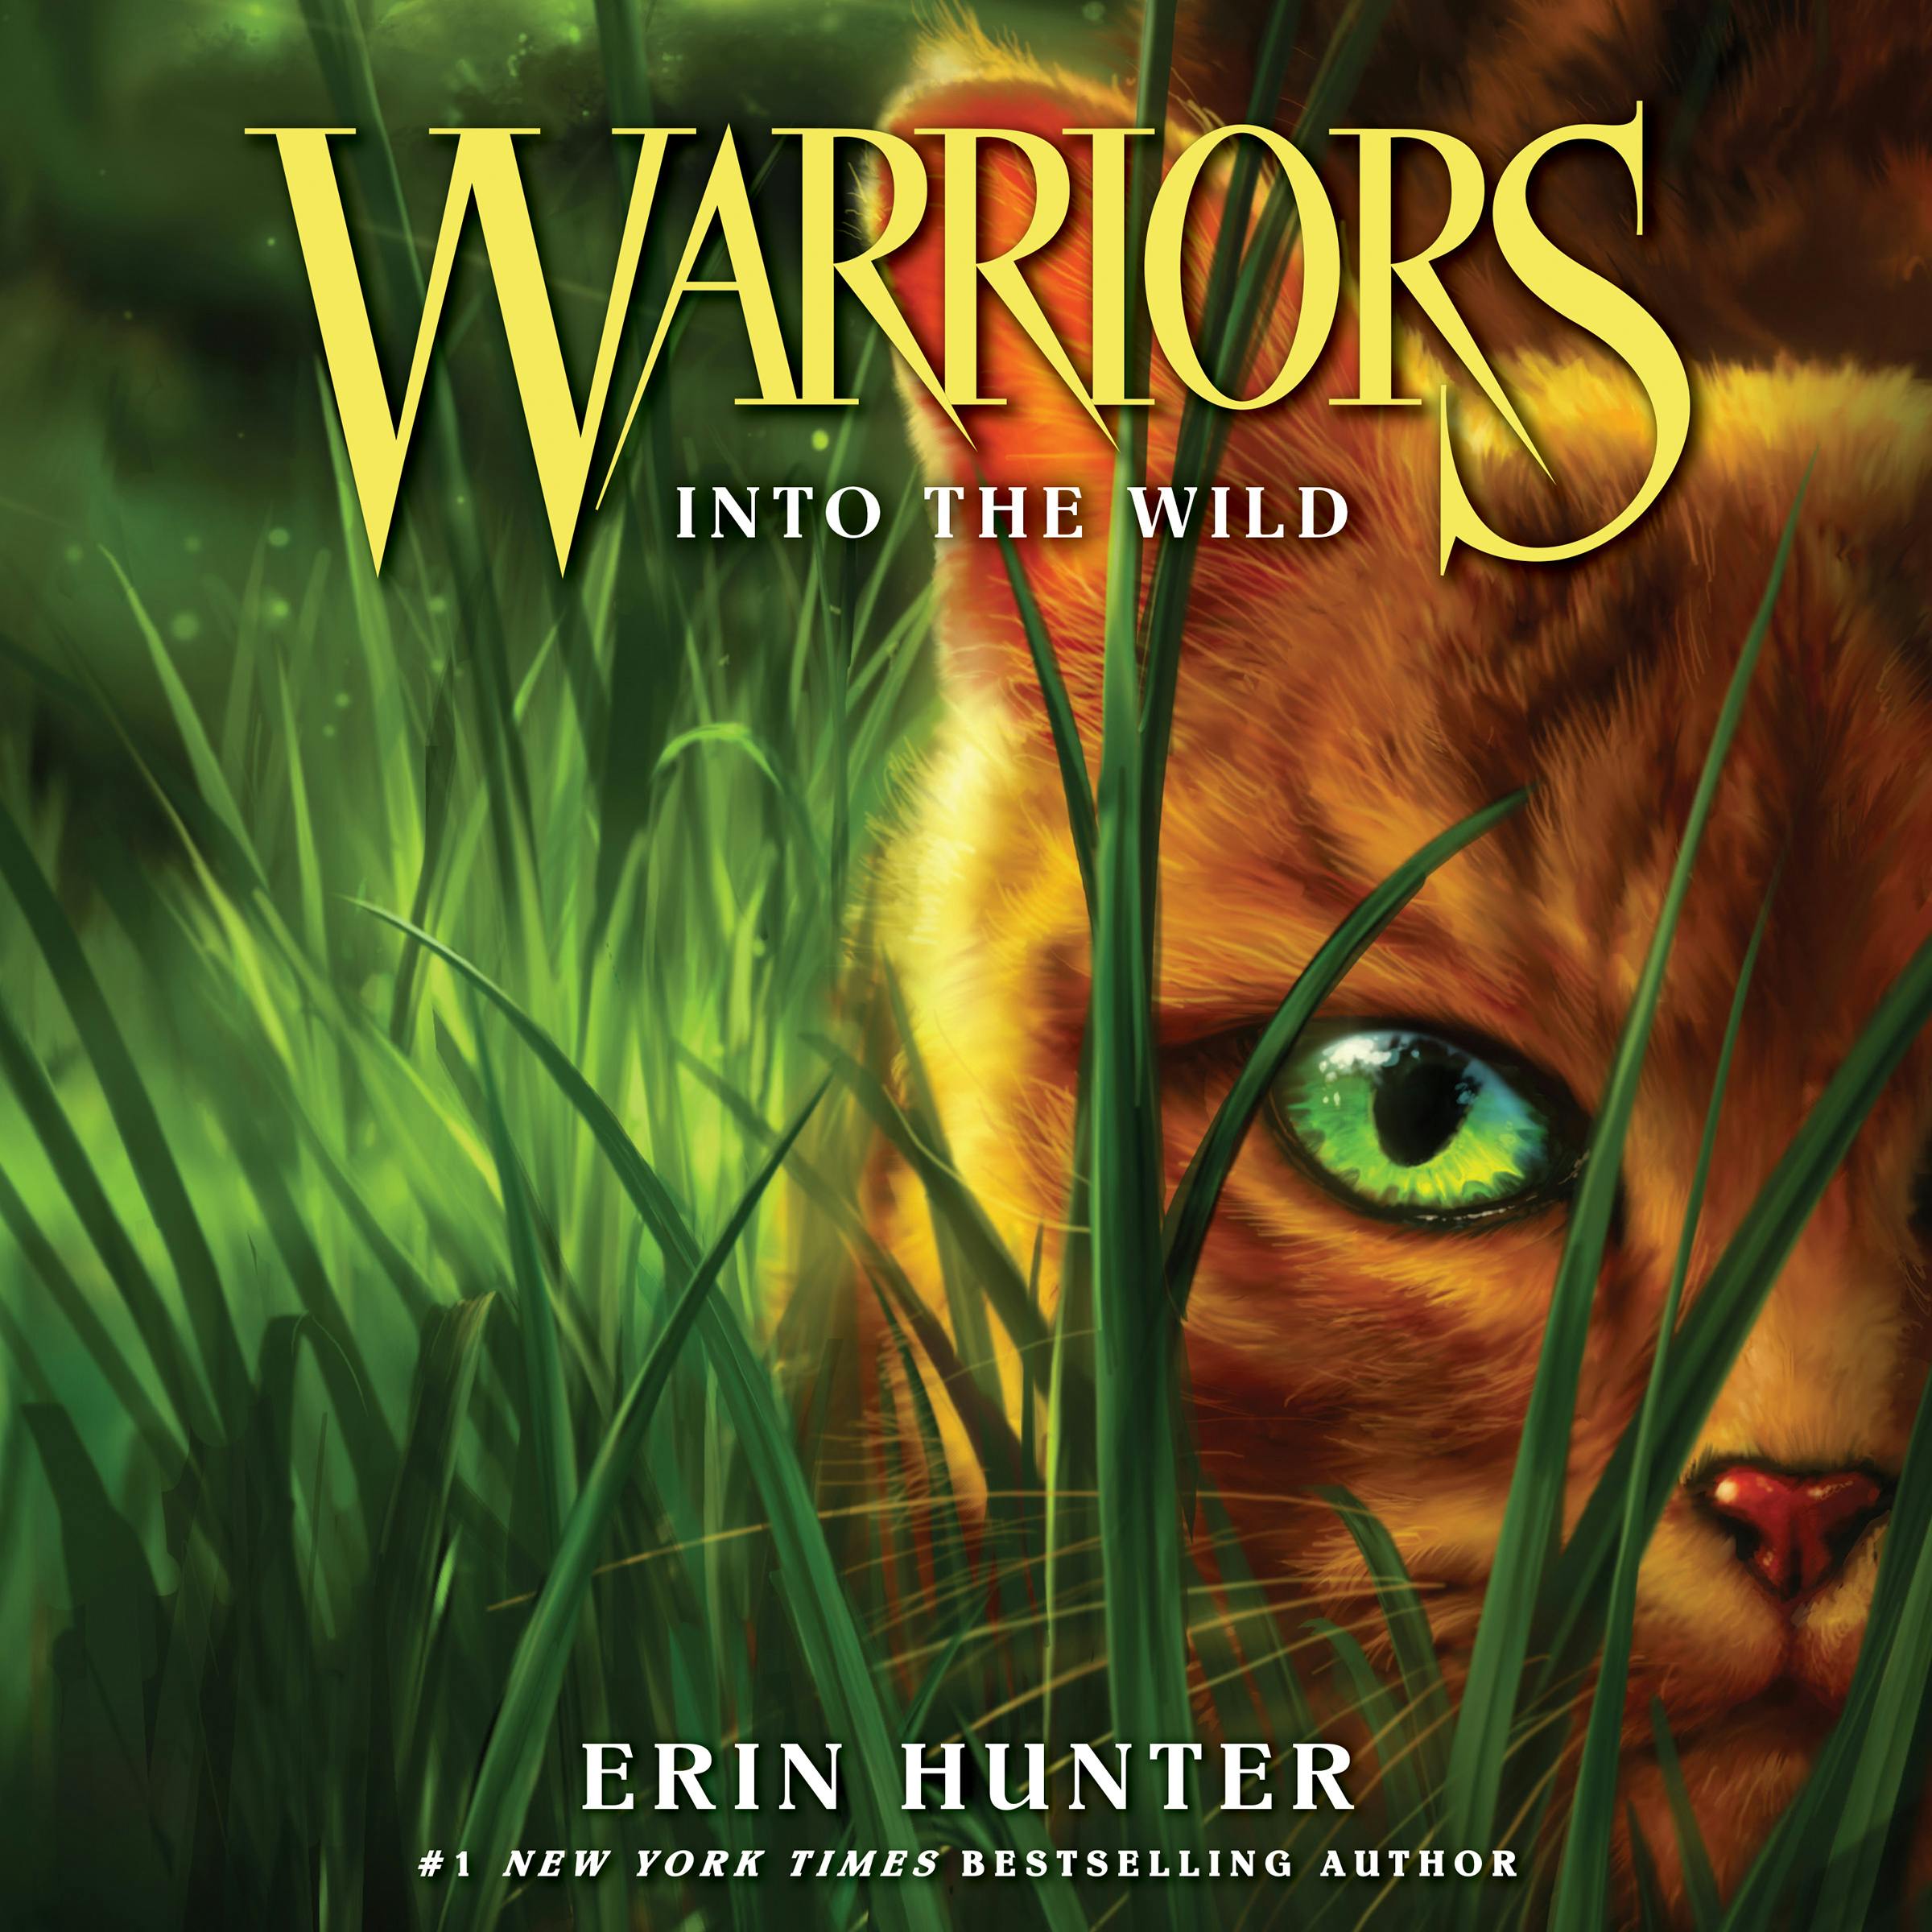 Warriors #1: Into the Wild - Erin Hunter